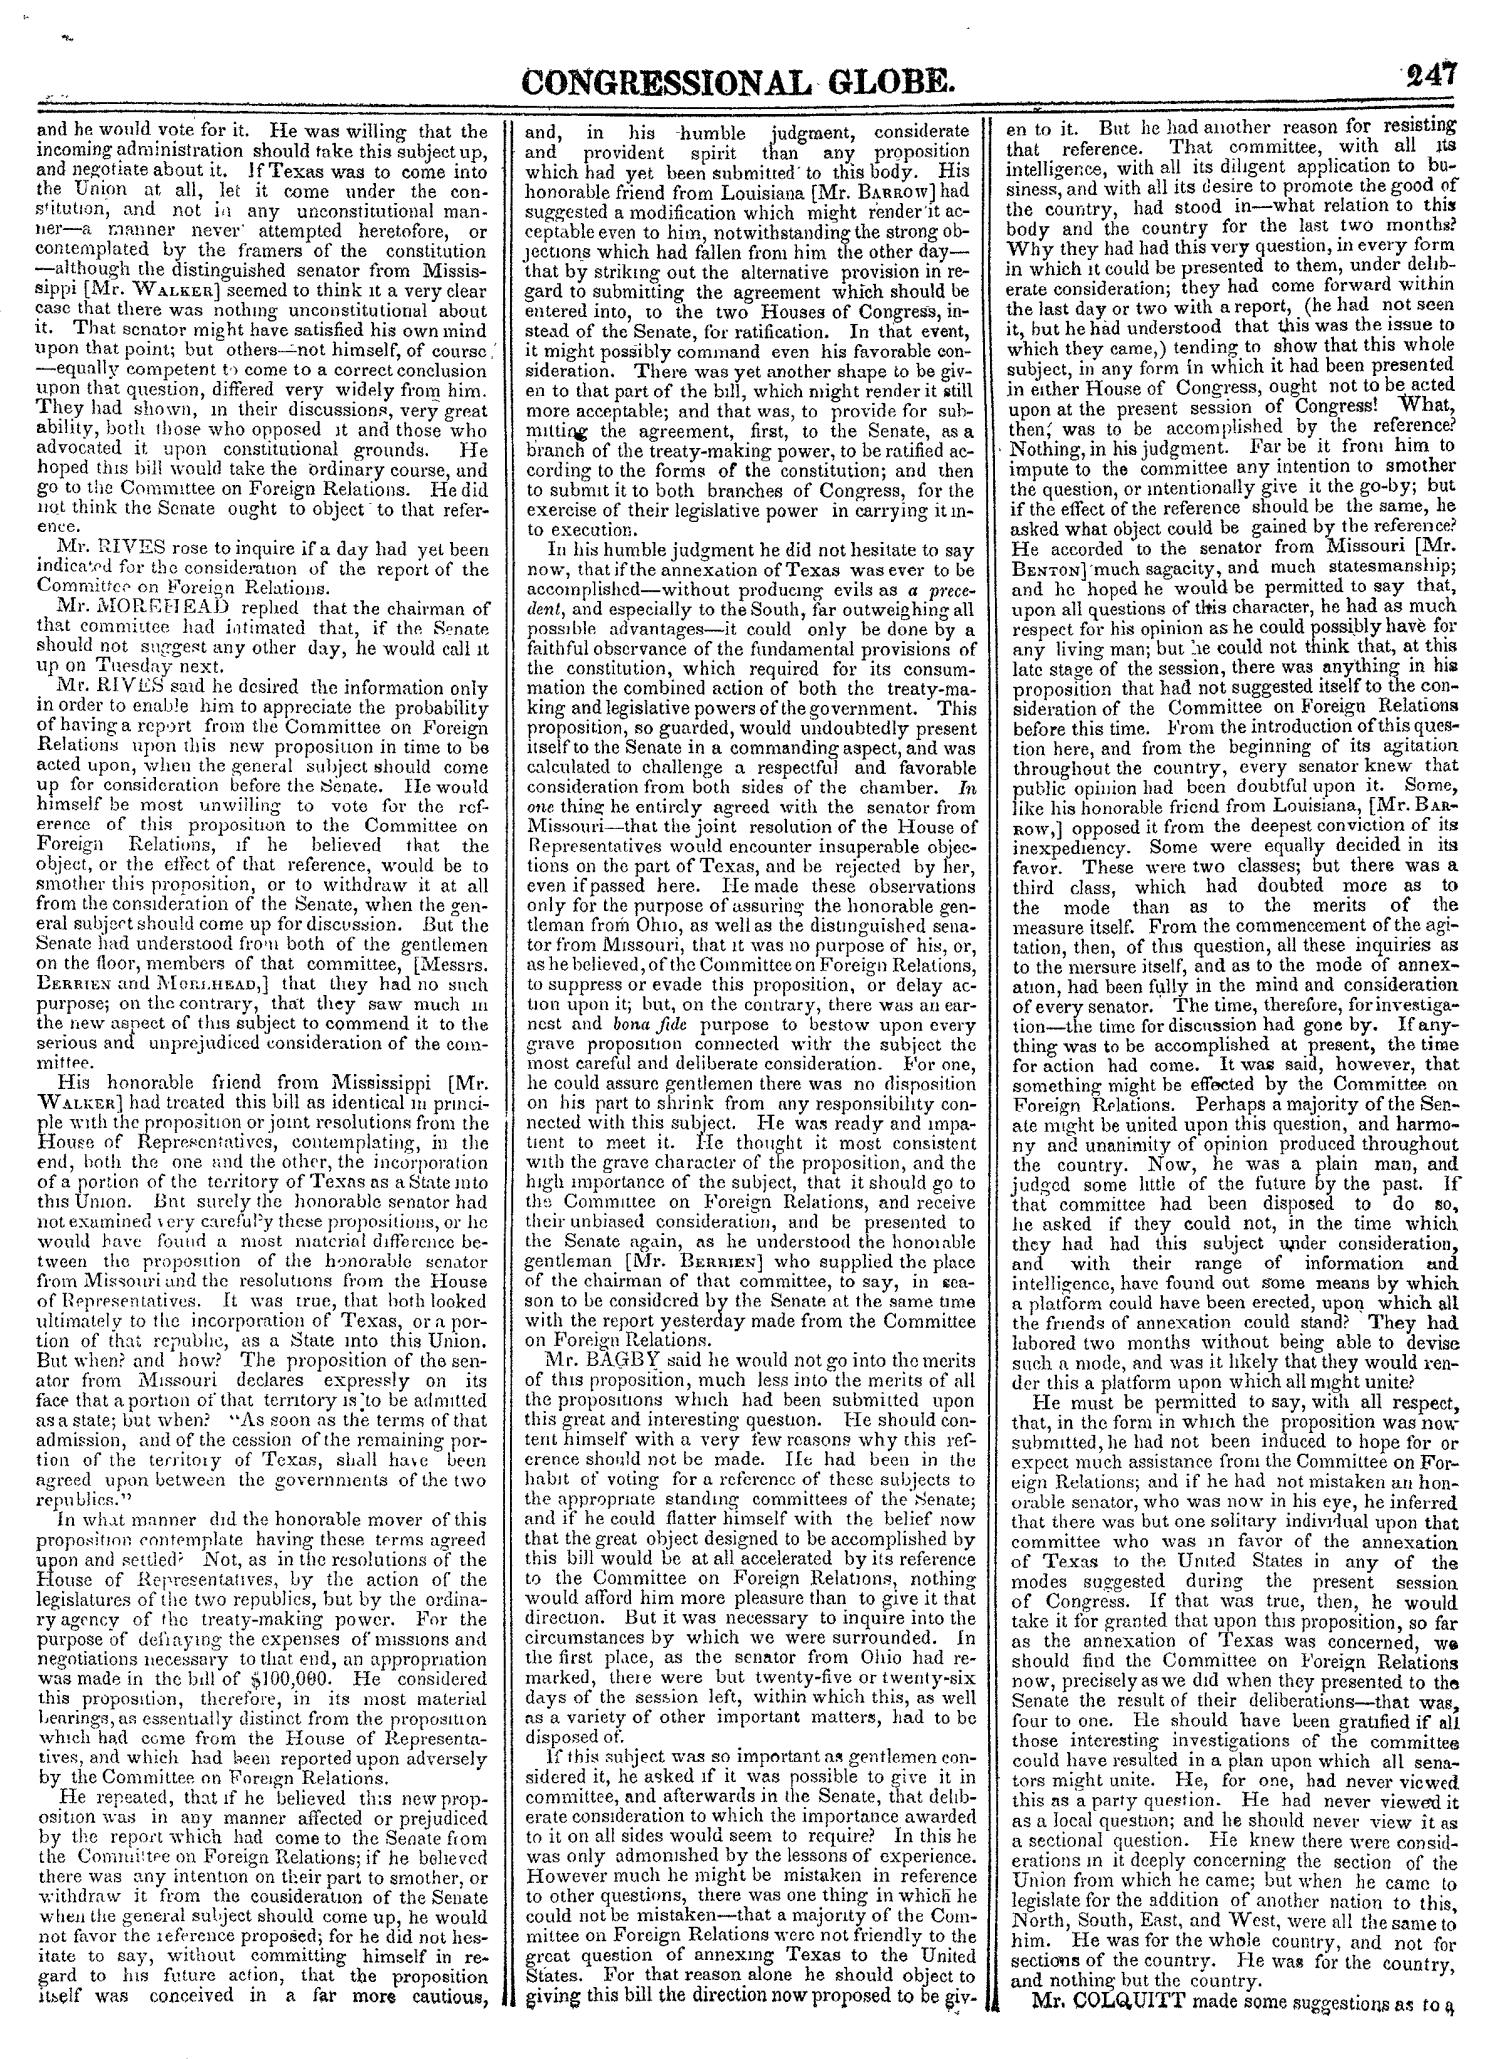 The Congressional Globe, Volume 14: Twenty-Eighth Congress, Second Session
                                                
                                                    247
                                                